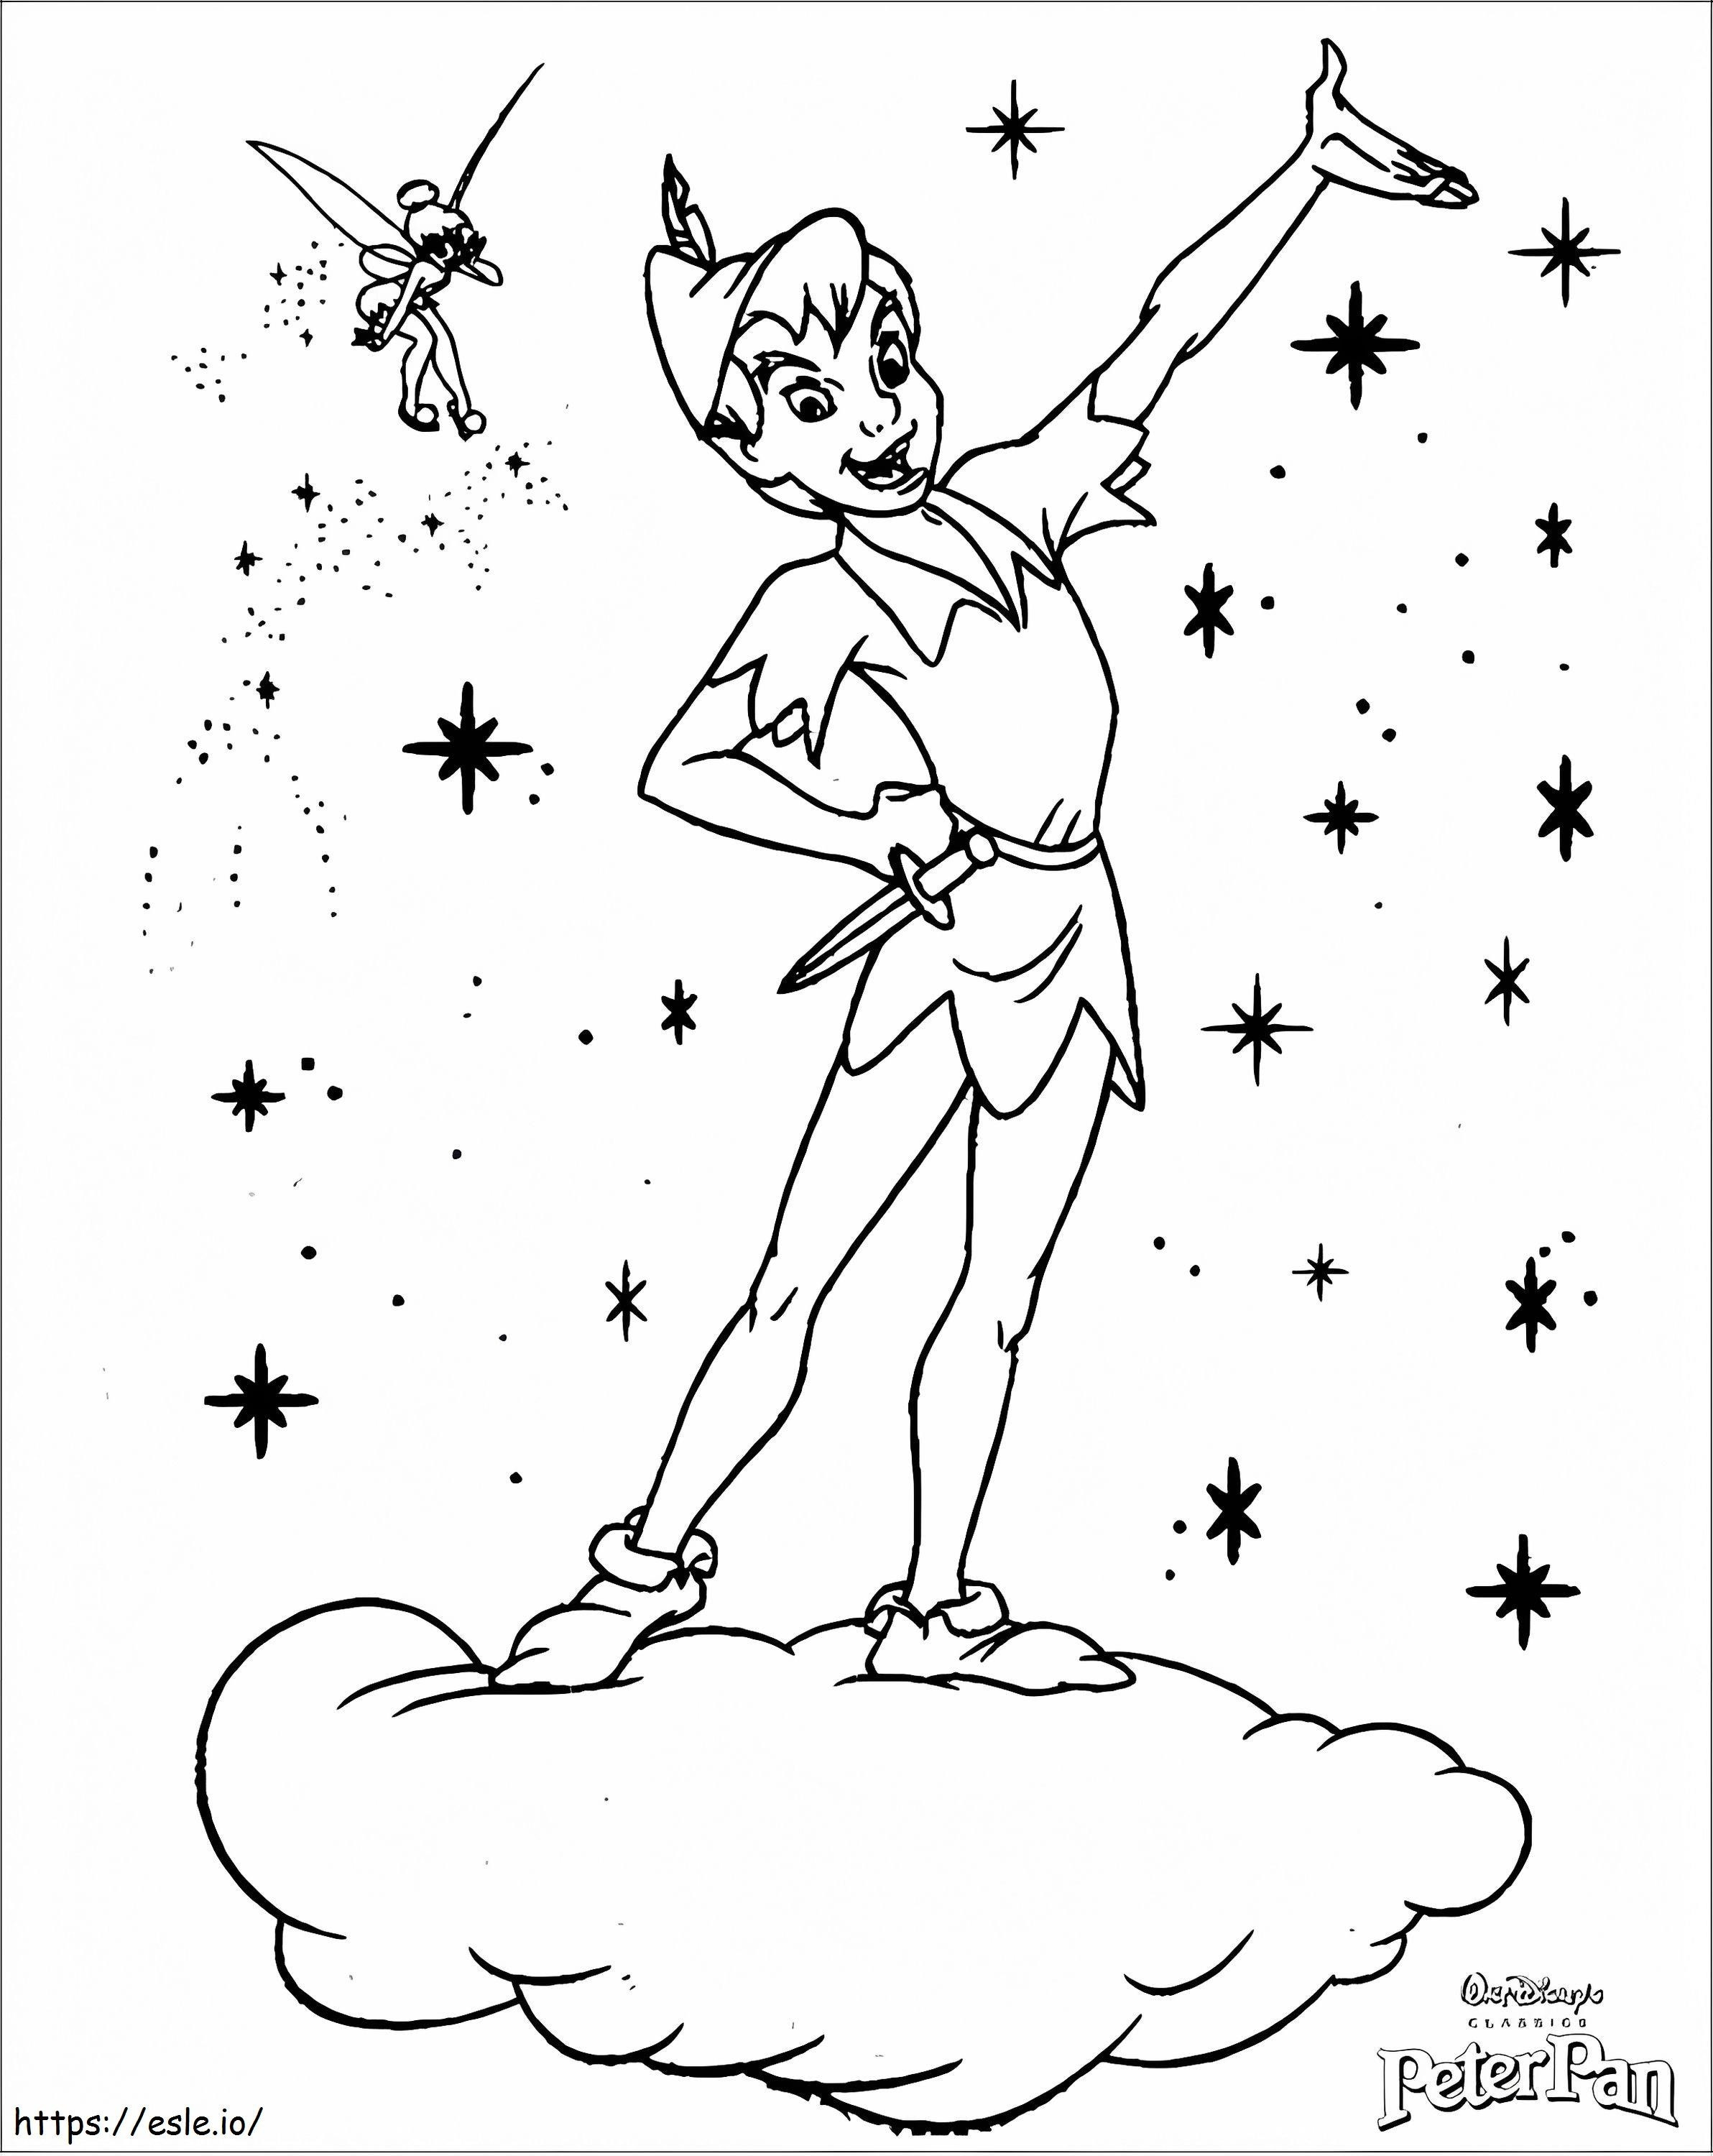 Peter Pan e Tinkerbell com estrela para colorir